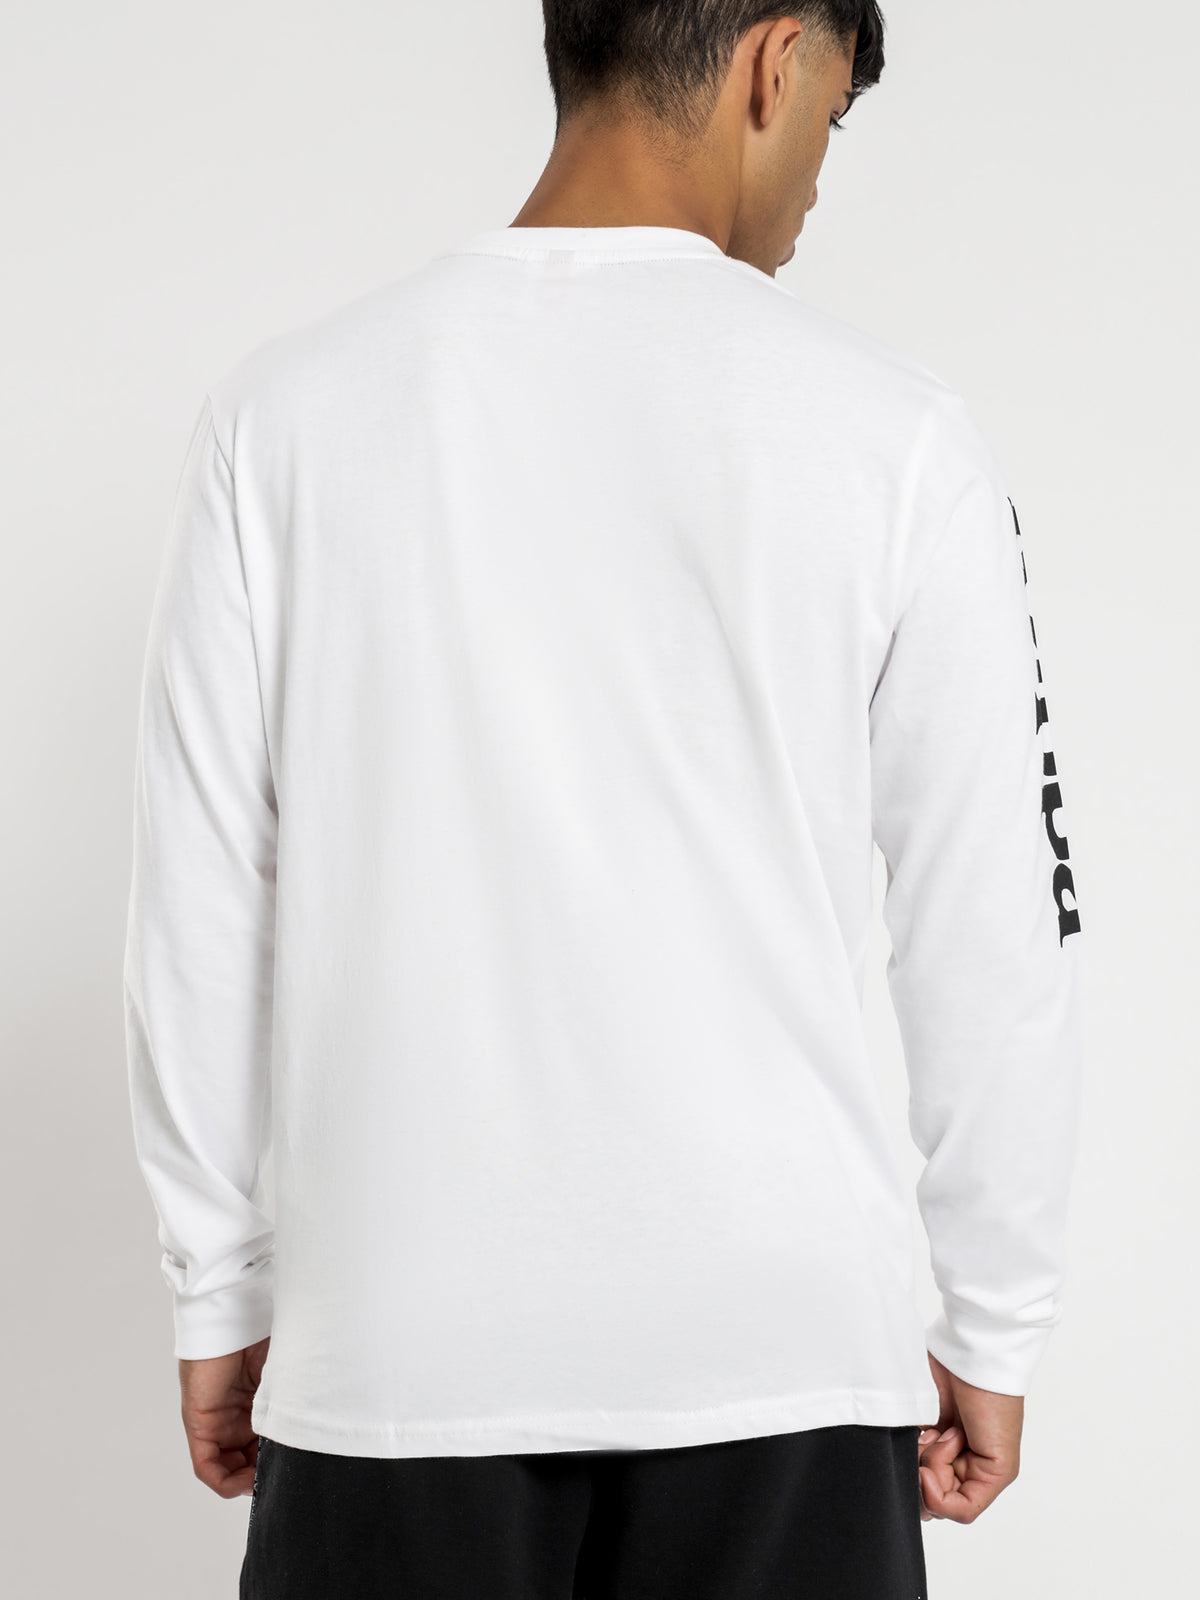 Authentic Ruiz 2 Long Sleeve T-Shirt in White